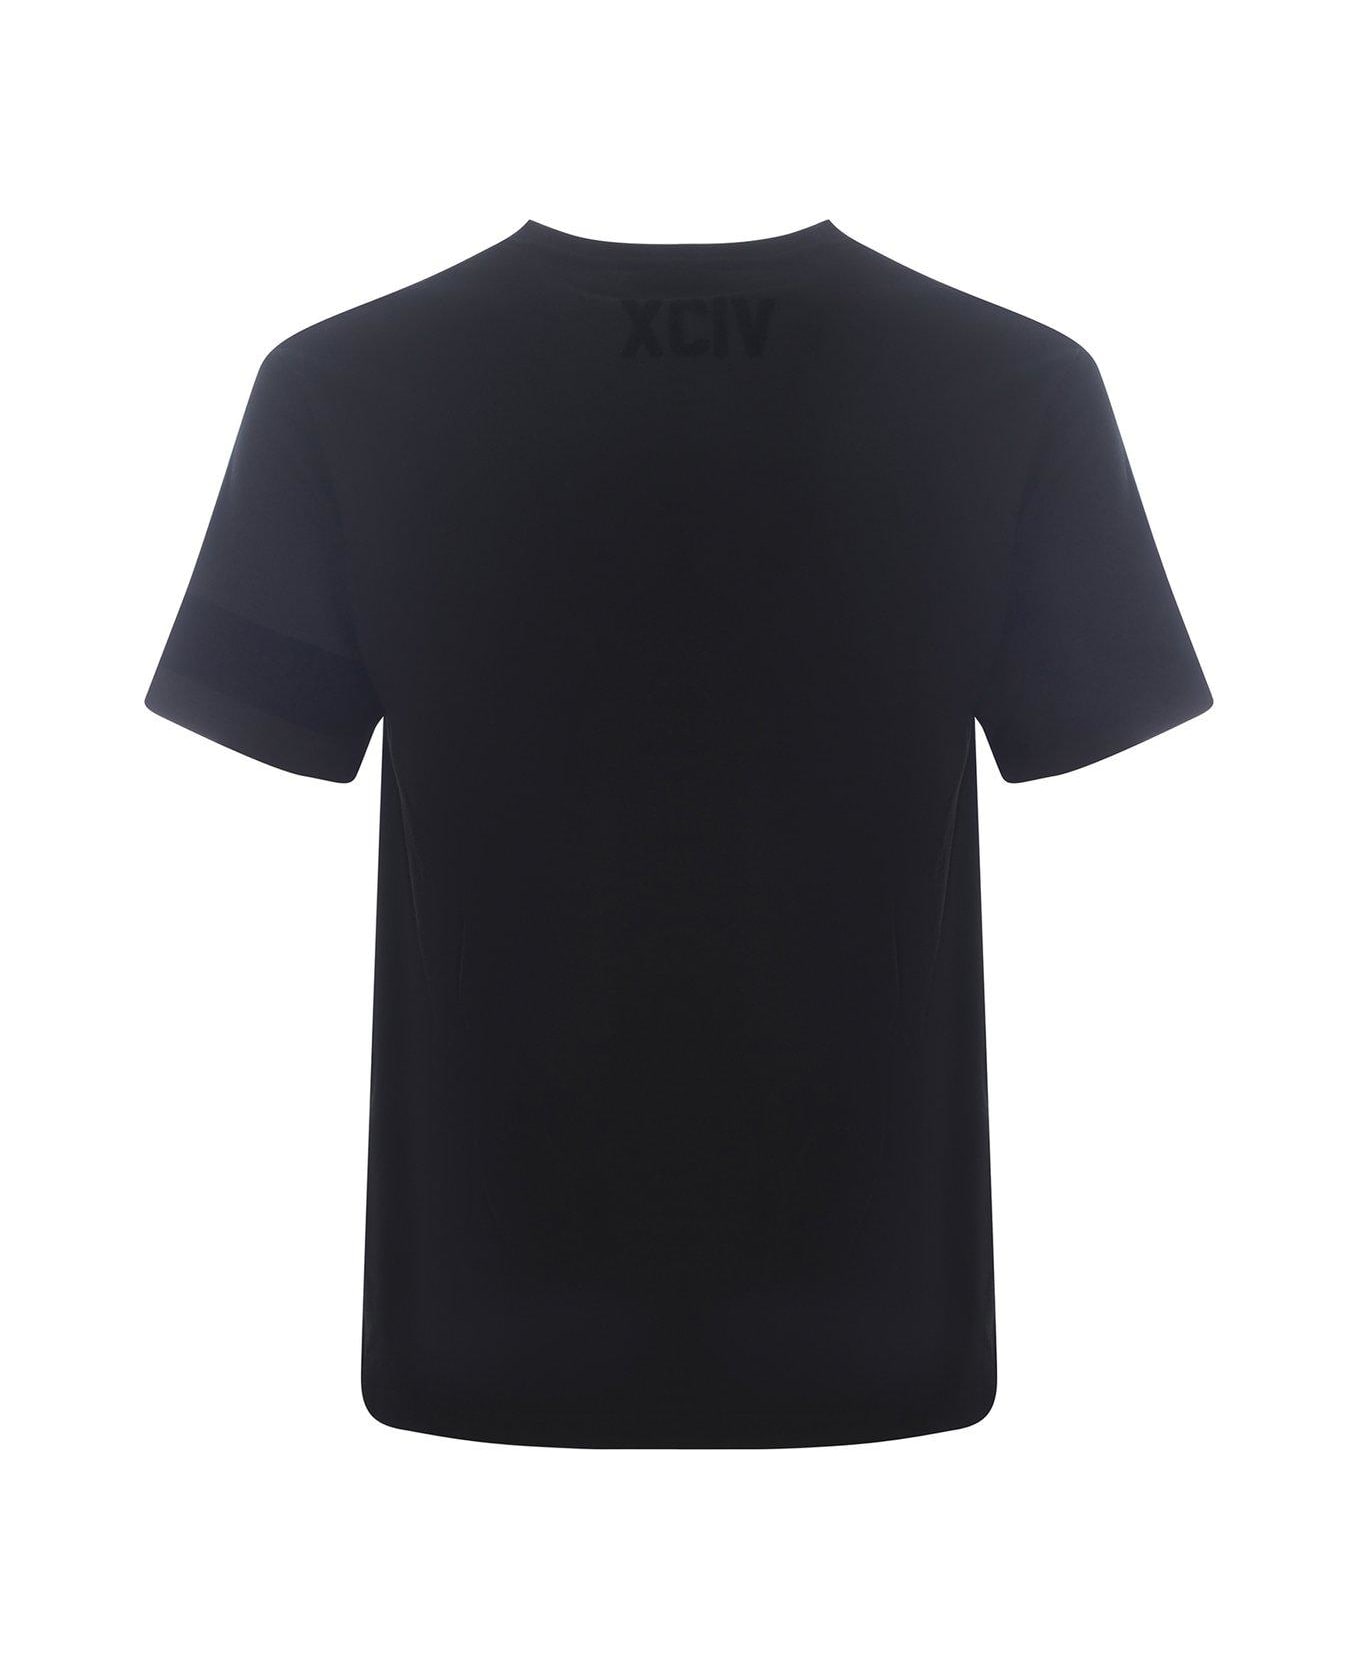 GCDS Short-sleeved Crewneck T-shirt - Nero シャツ